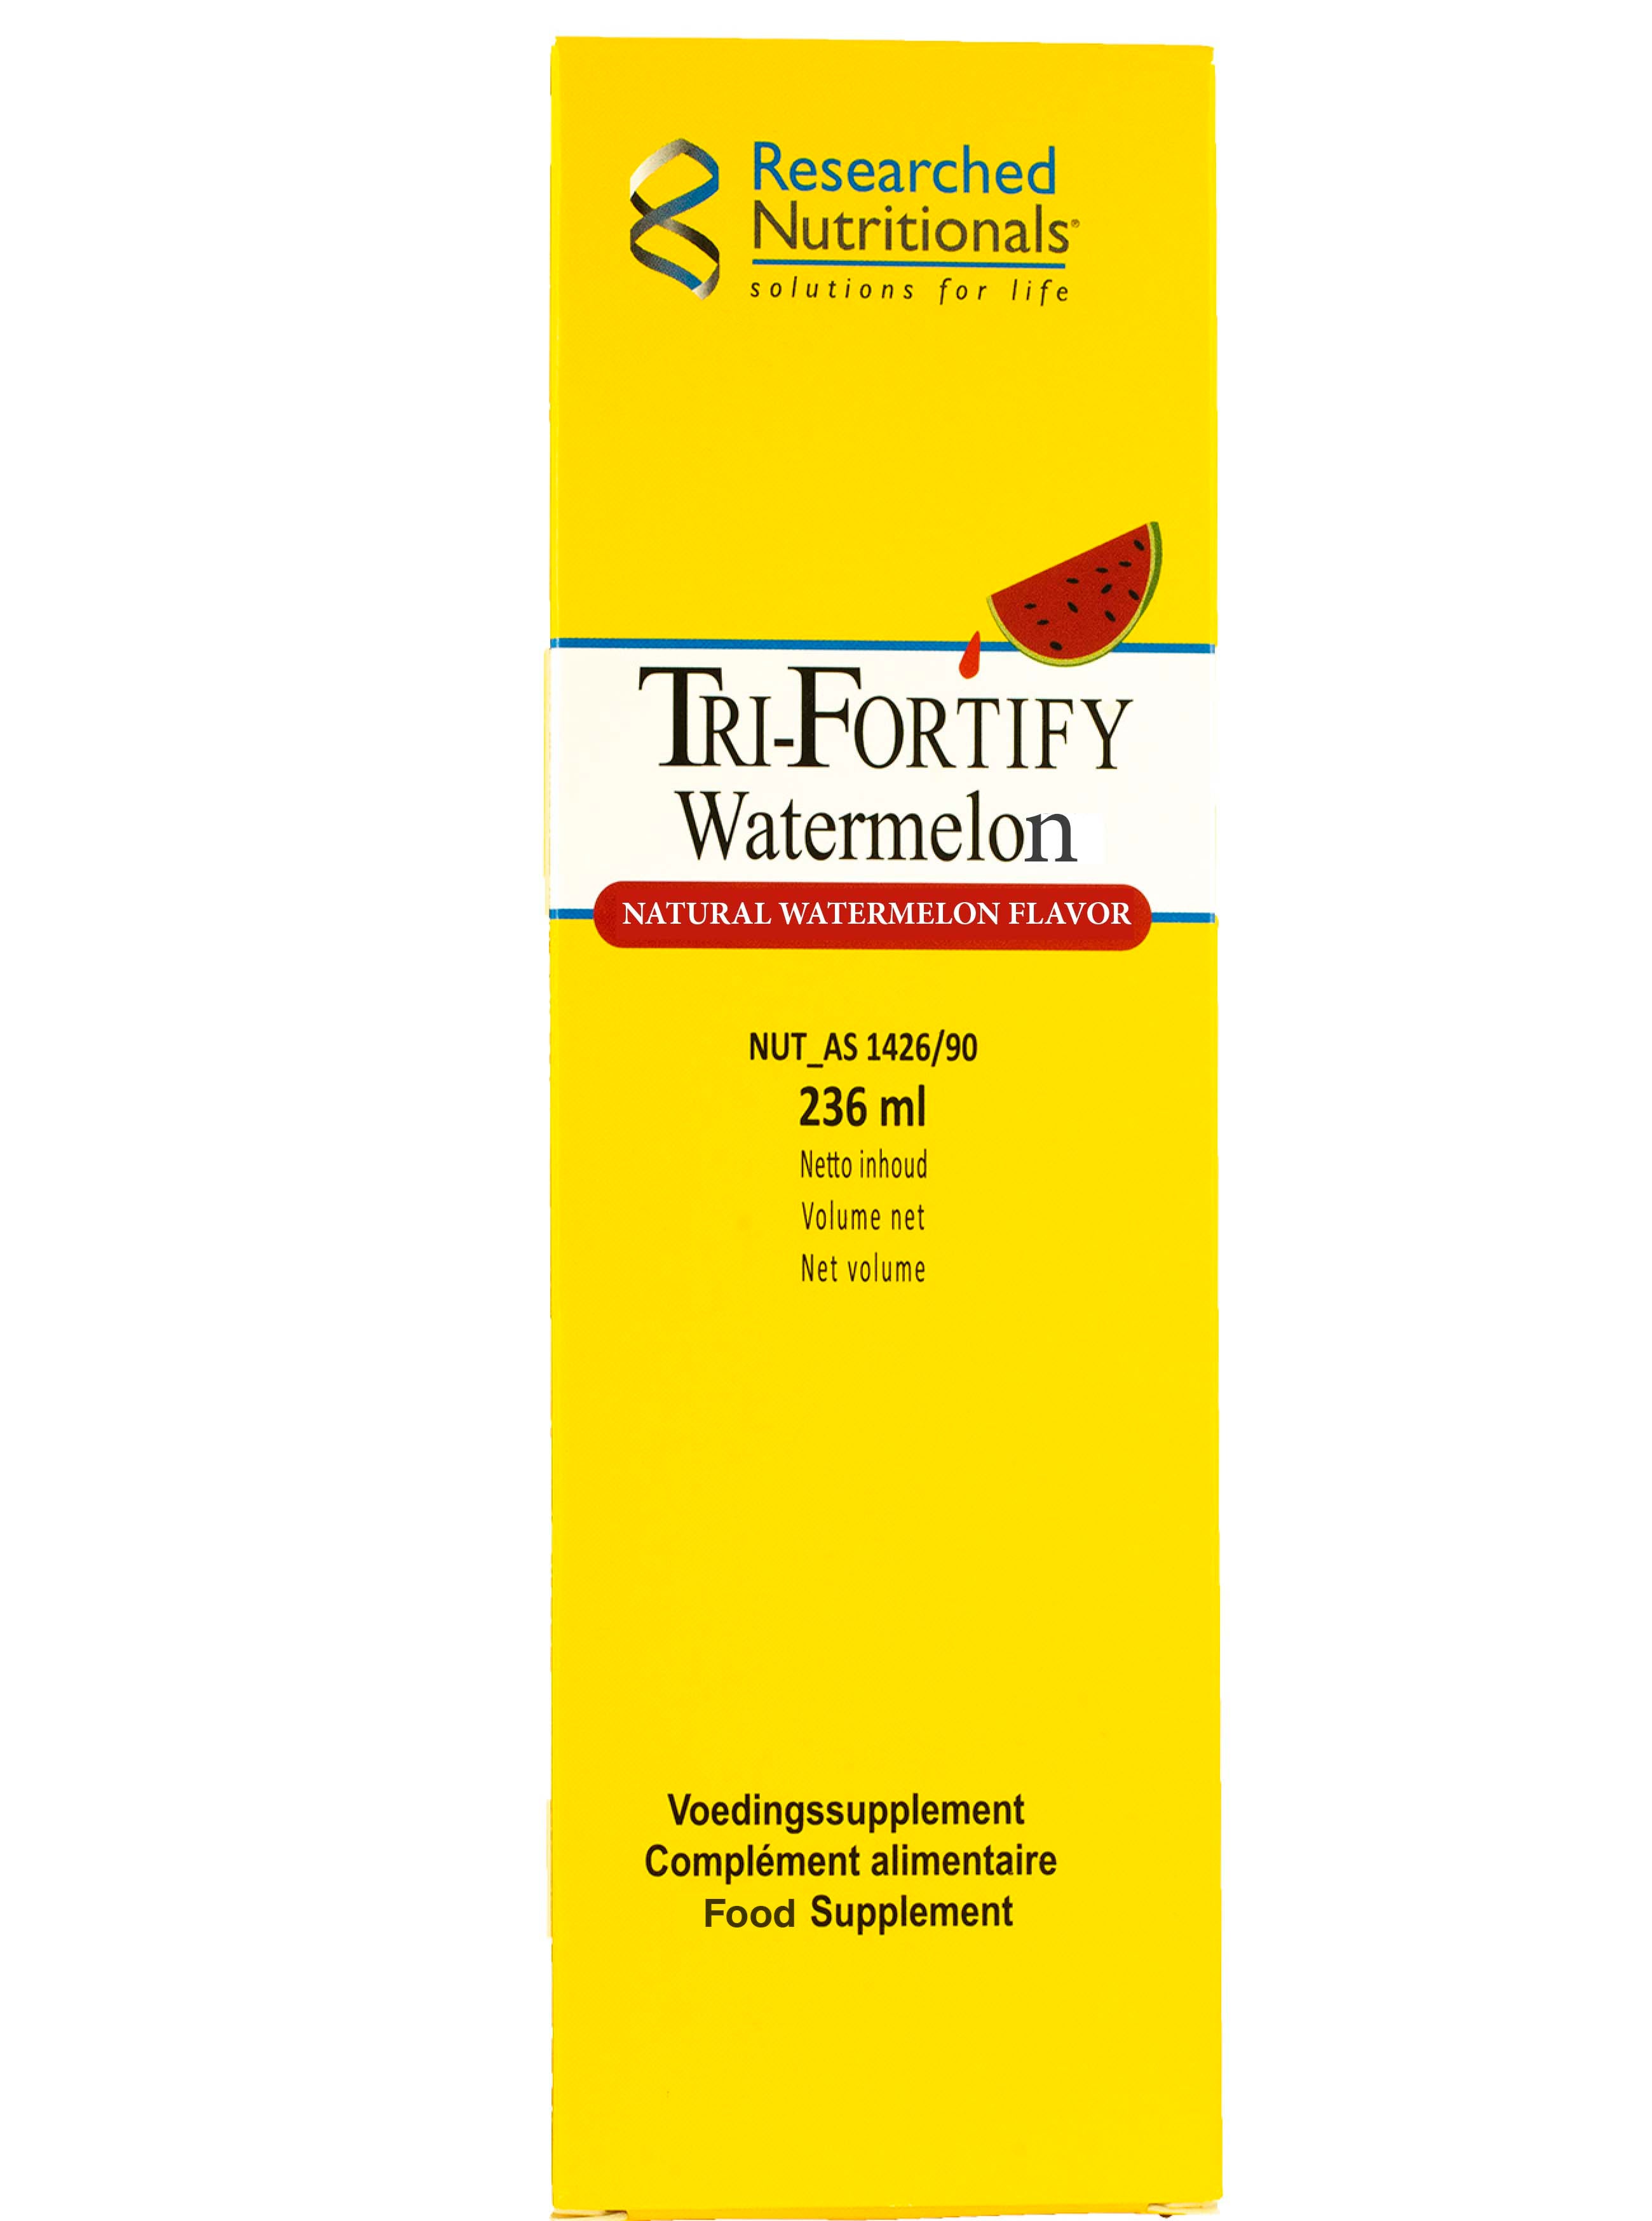 Researched Nutritionals Tri-Fortify Watermelon Liposomal Glutathione 236ml